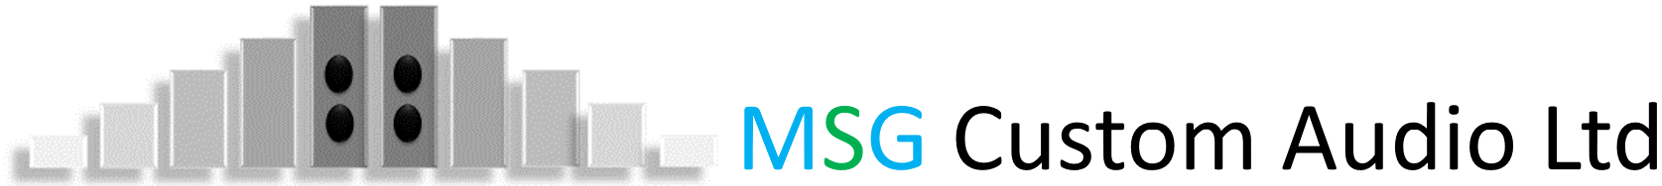 MSG Custom Audio